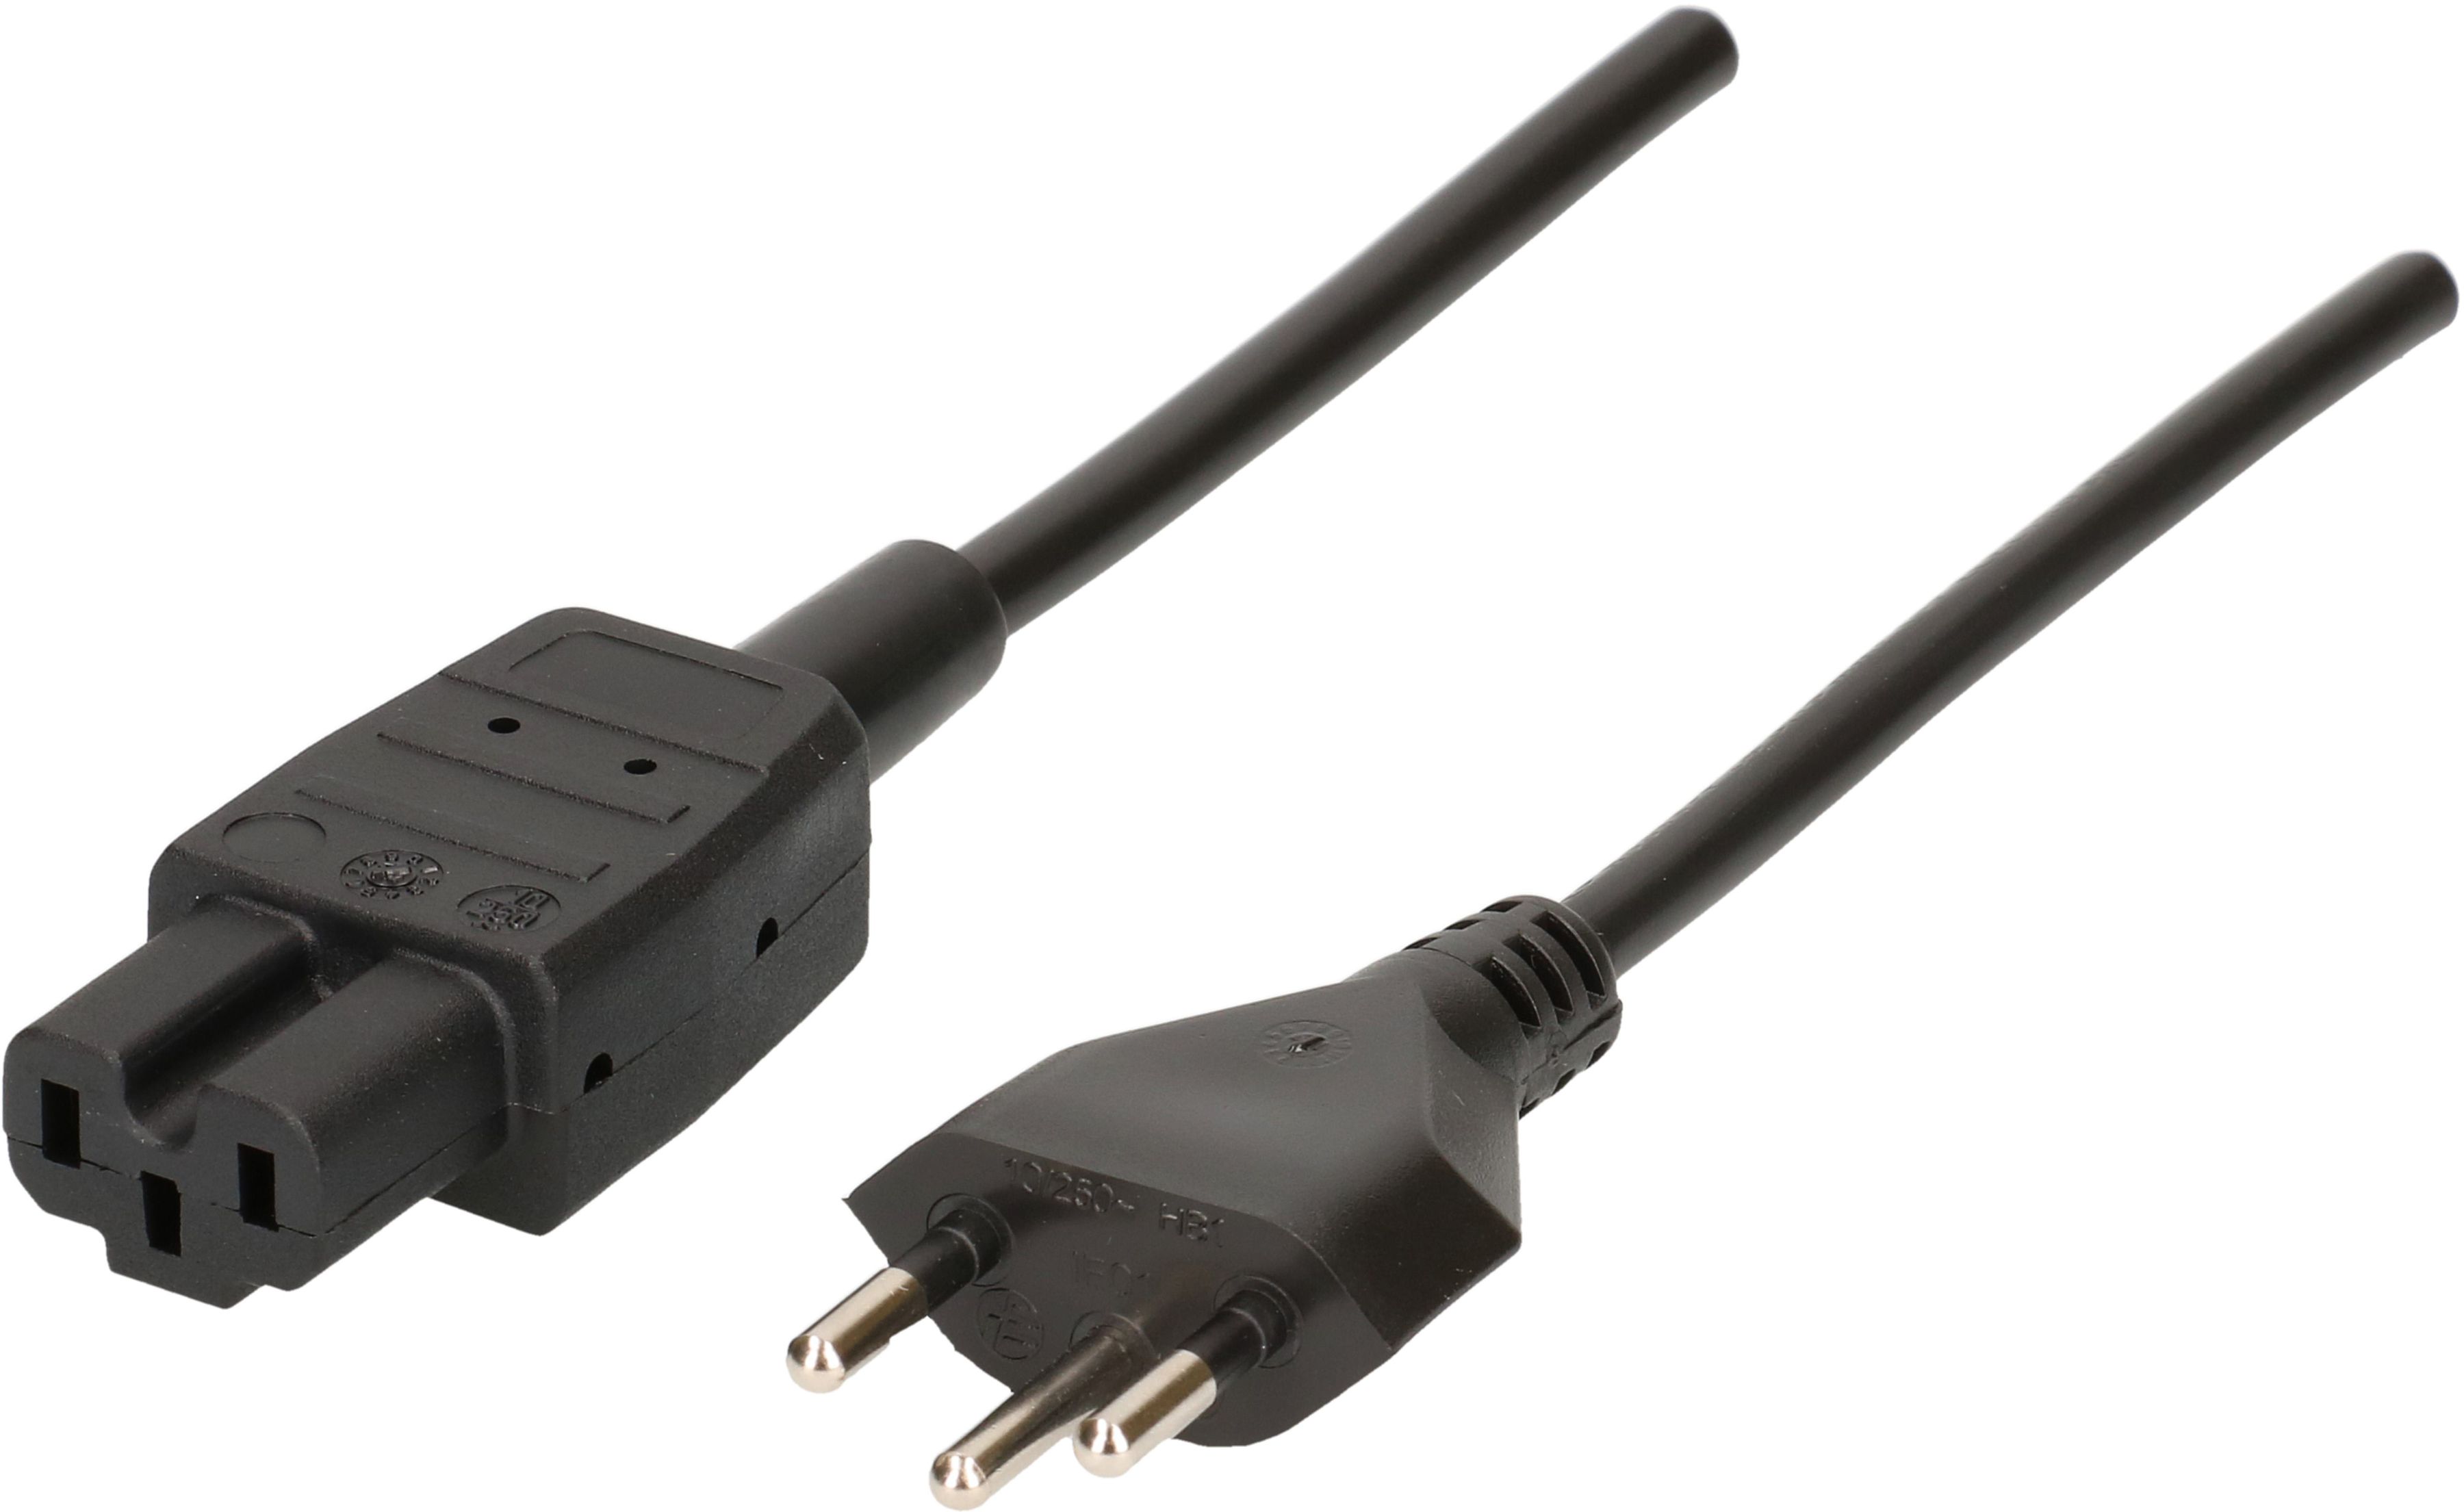 Cable cordset TD H05VV-F3G1.0 2m black T12/C15A